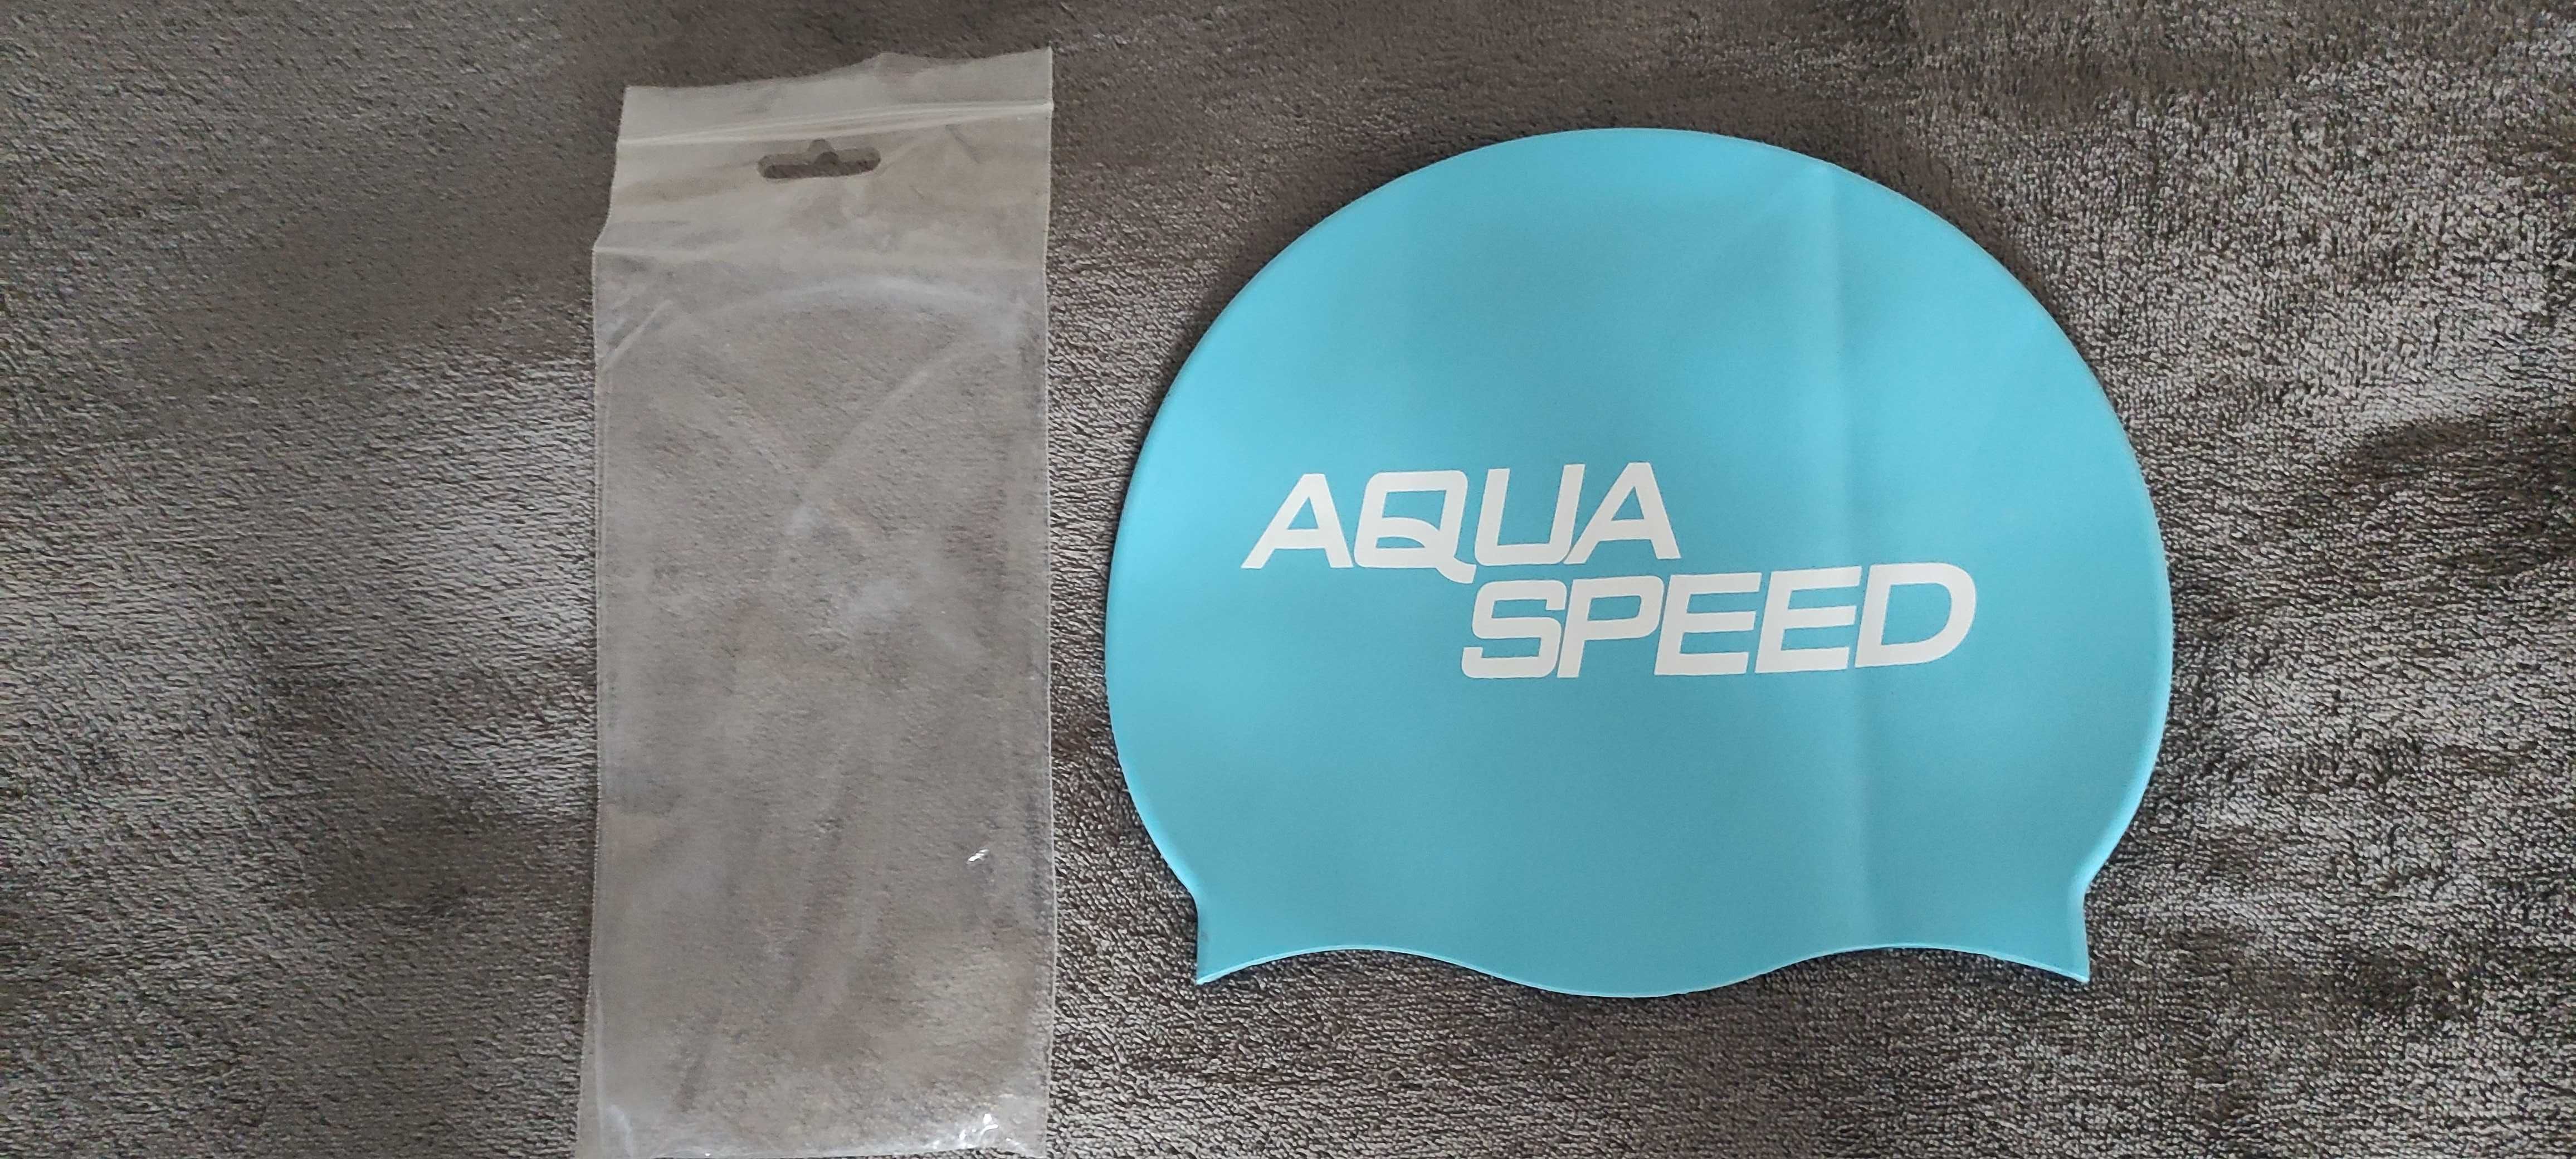 Czepek pływacki Aqua Speed Lotto Triathlon Energy